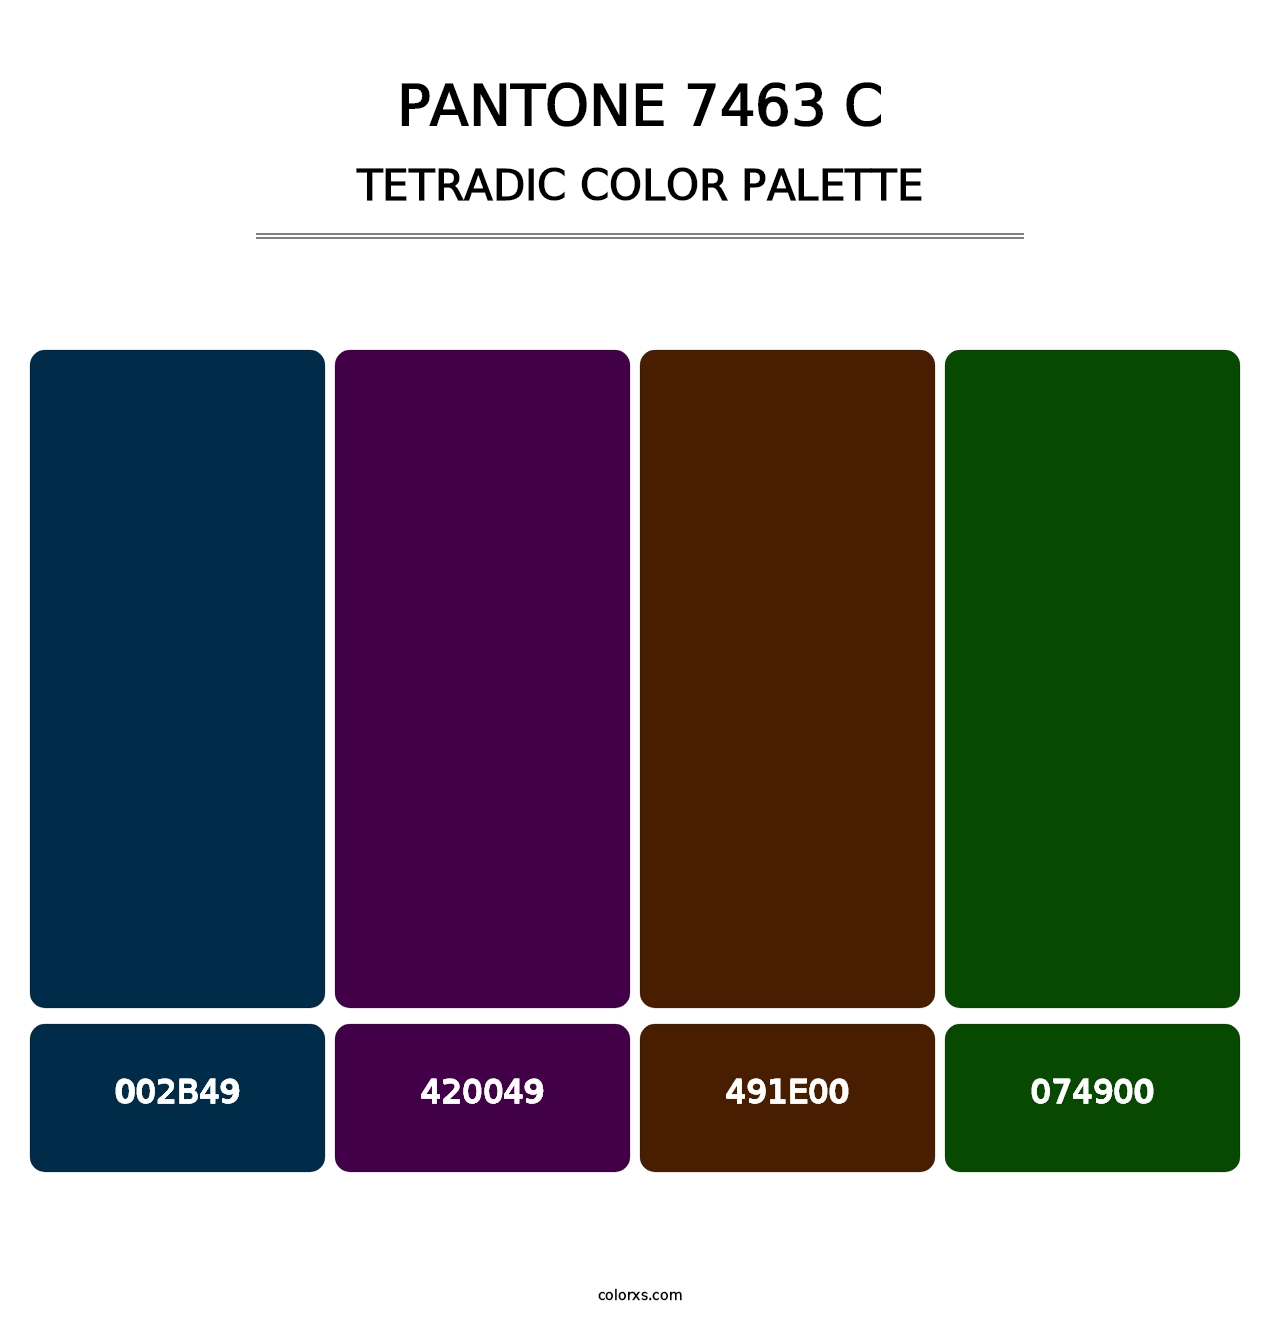 PANTONE 7463 C - Tetradic Color Palette